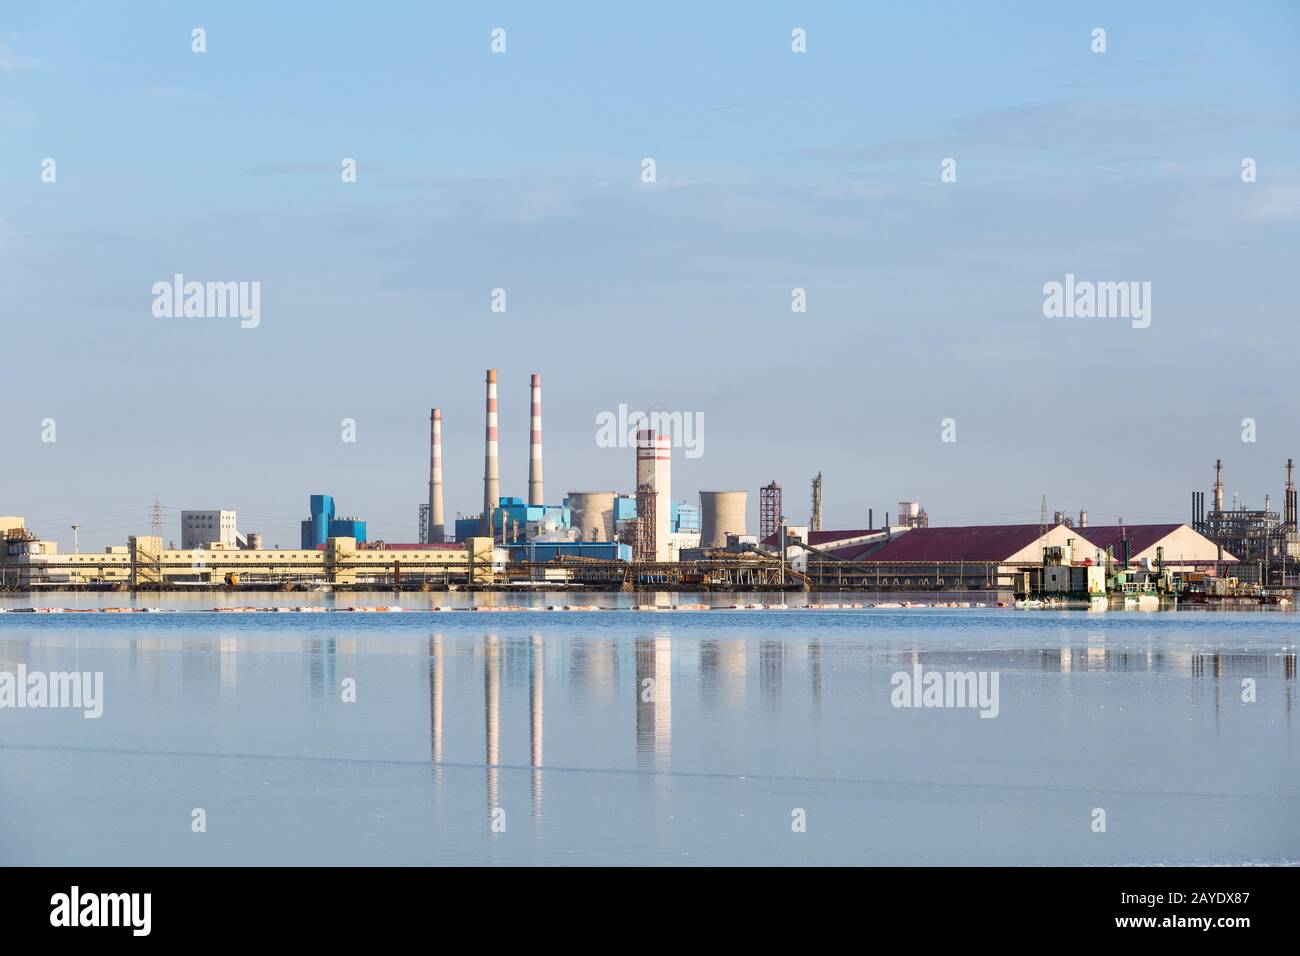 potash factory reflection in salt lake Stock Photo